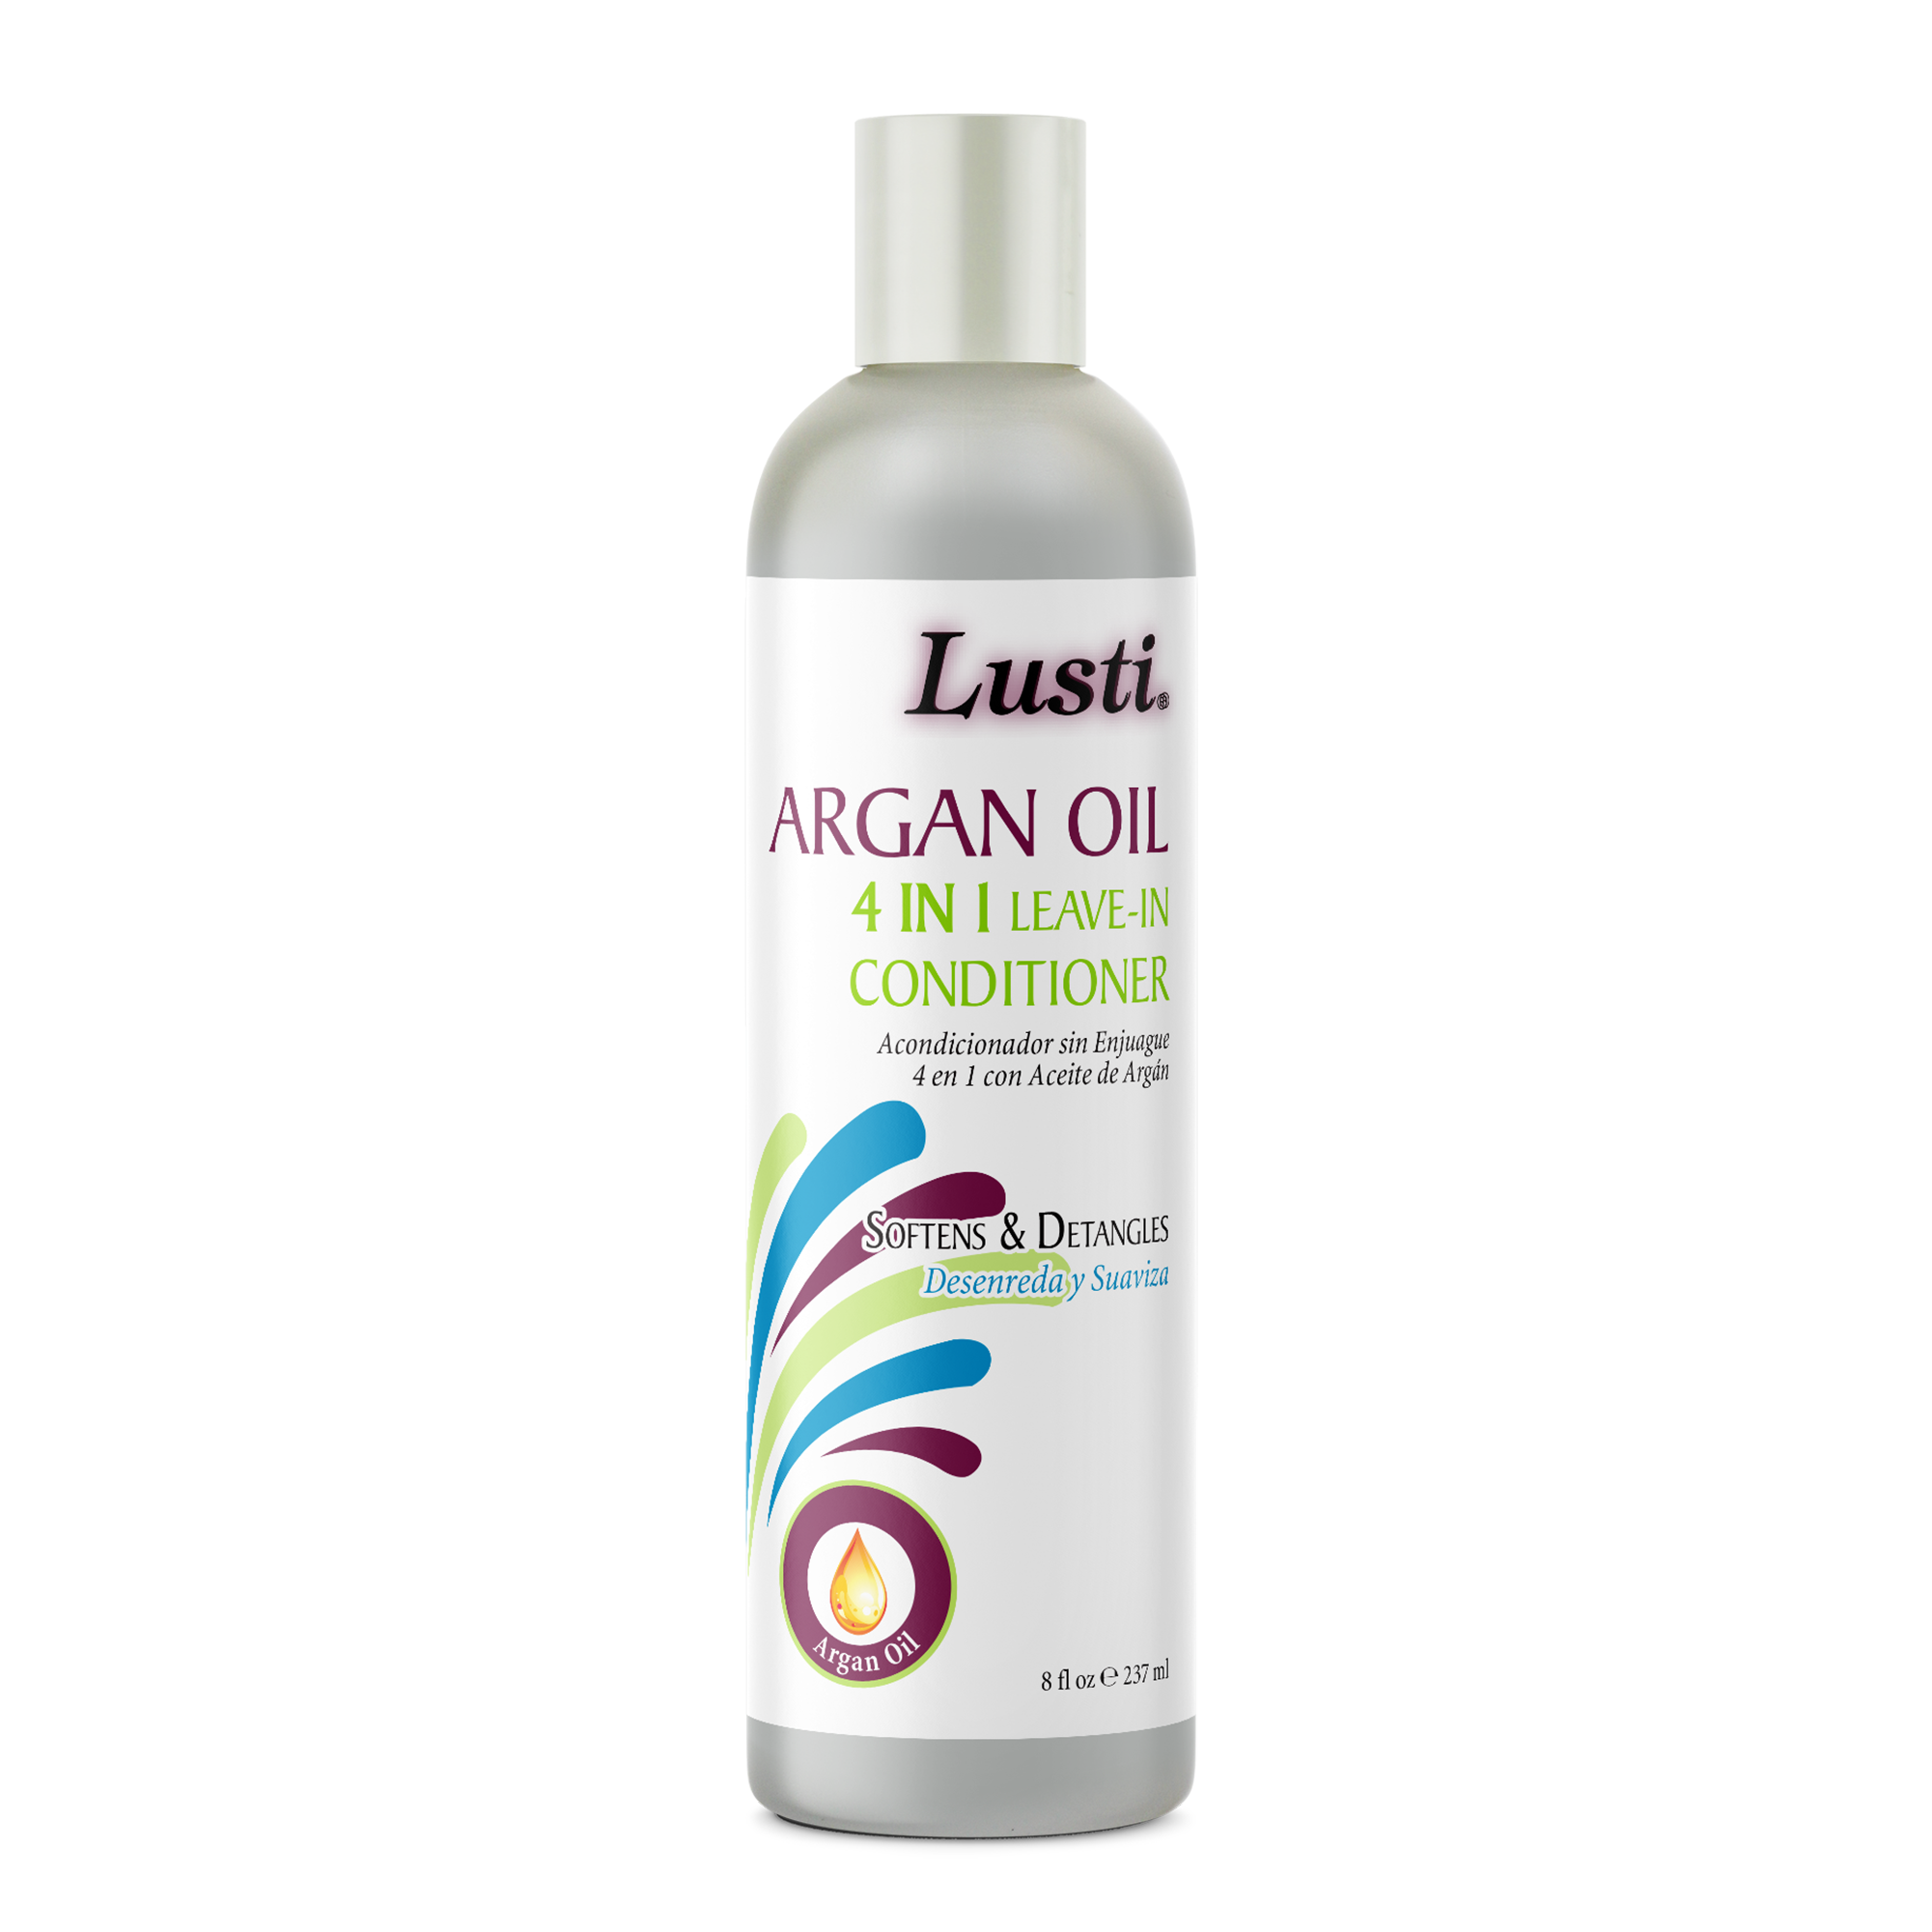 Lusti Argan Oil 4 IN 1 Leave-In Conditioner